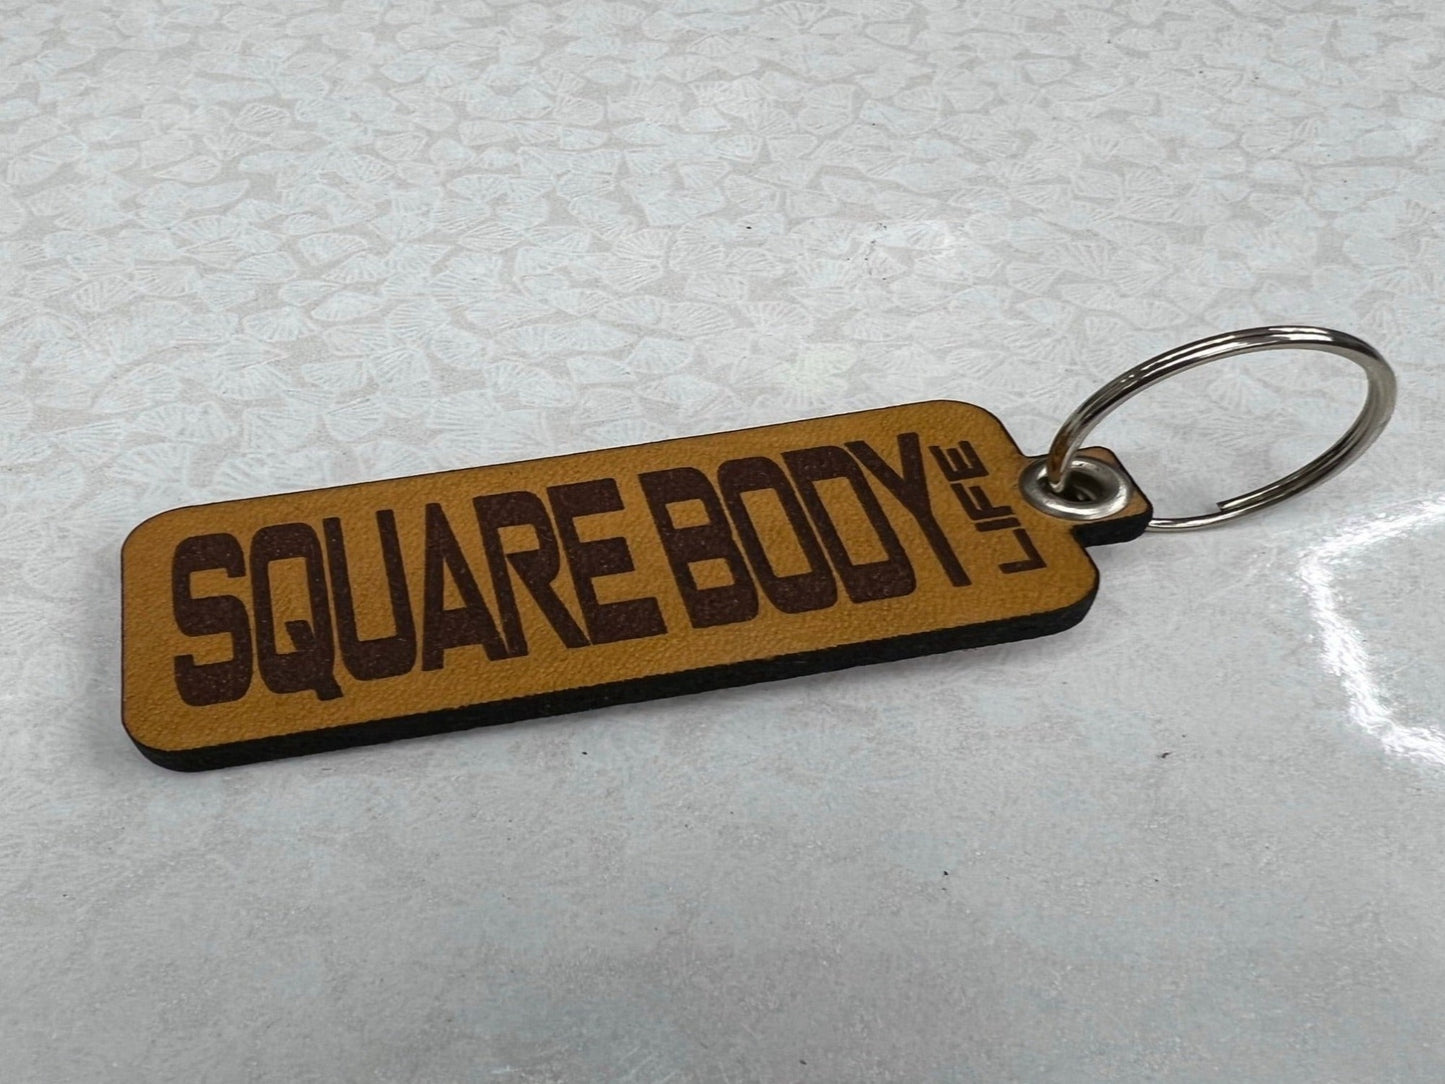 Leather C10 Squarebody LIFE Round Eye Keychain - Handmade GMC Chevy K5 Accessory by Oklahoma Customs